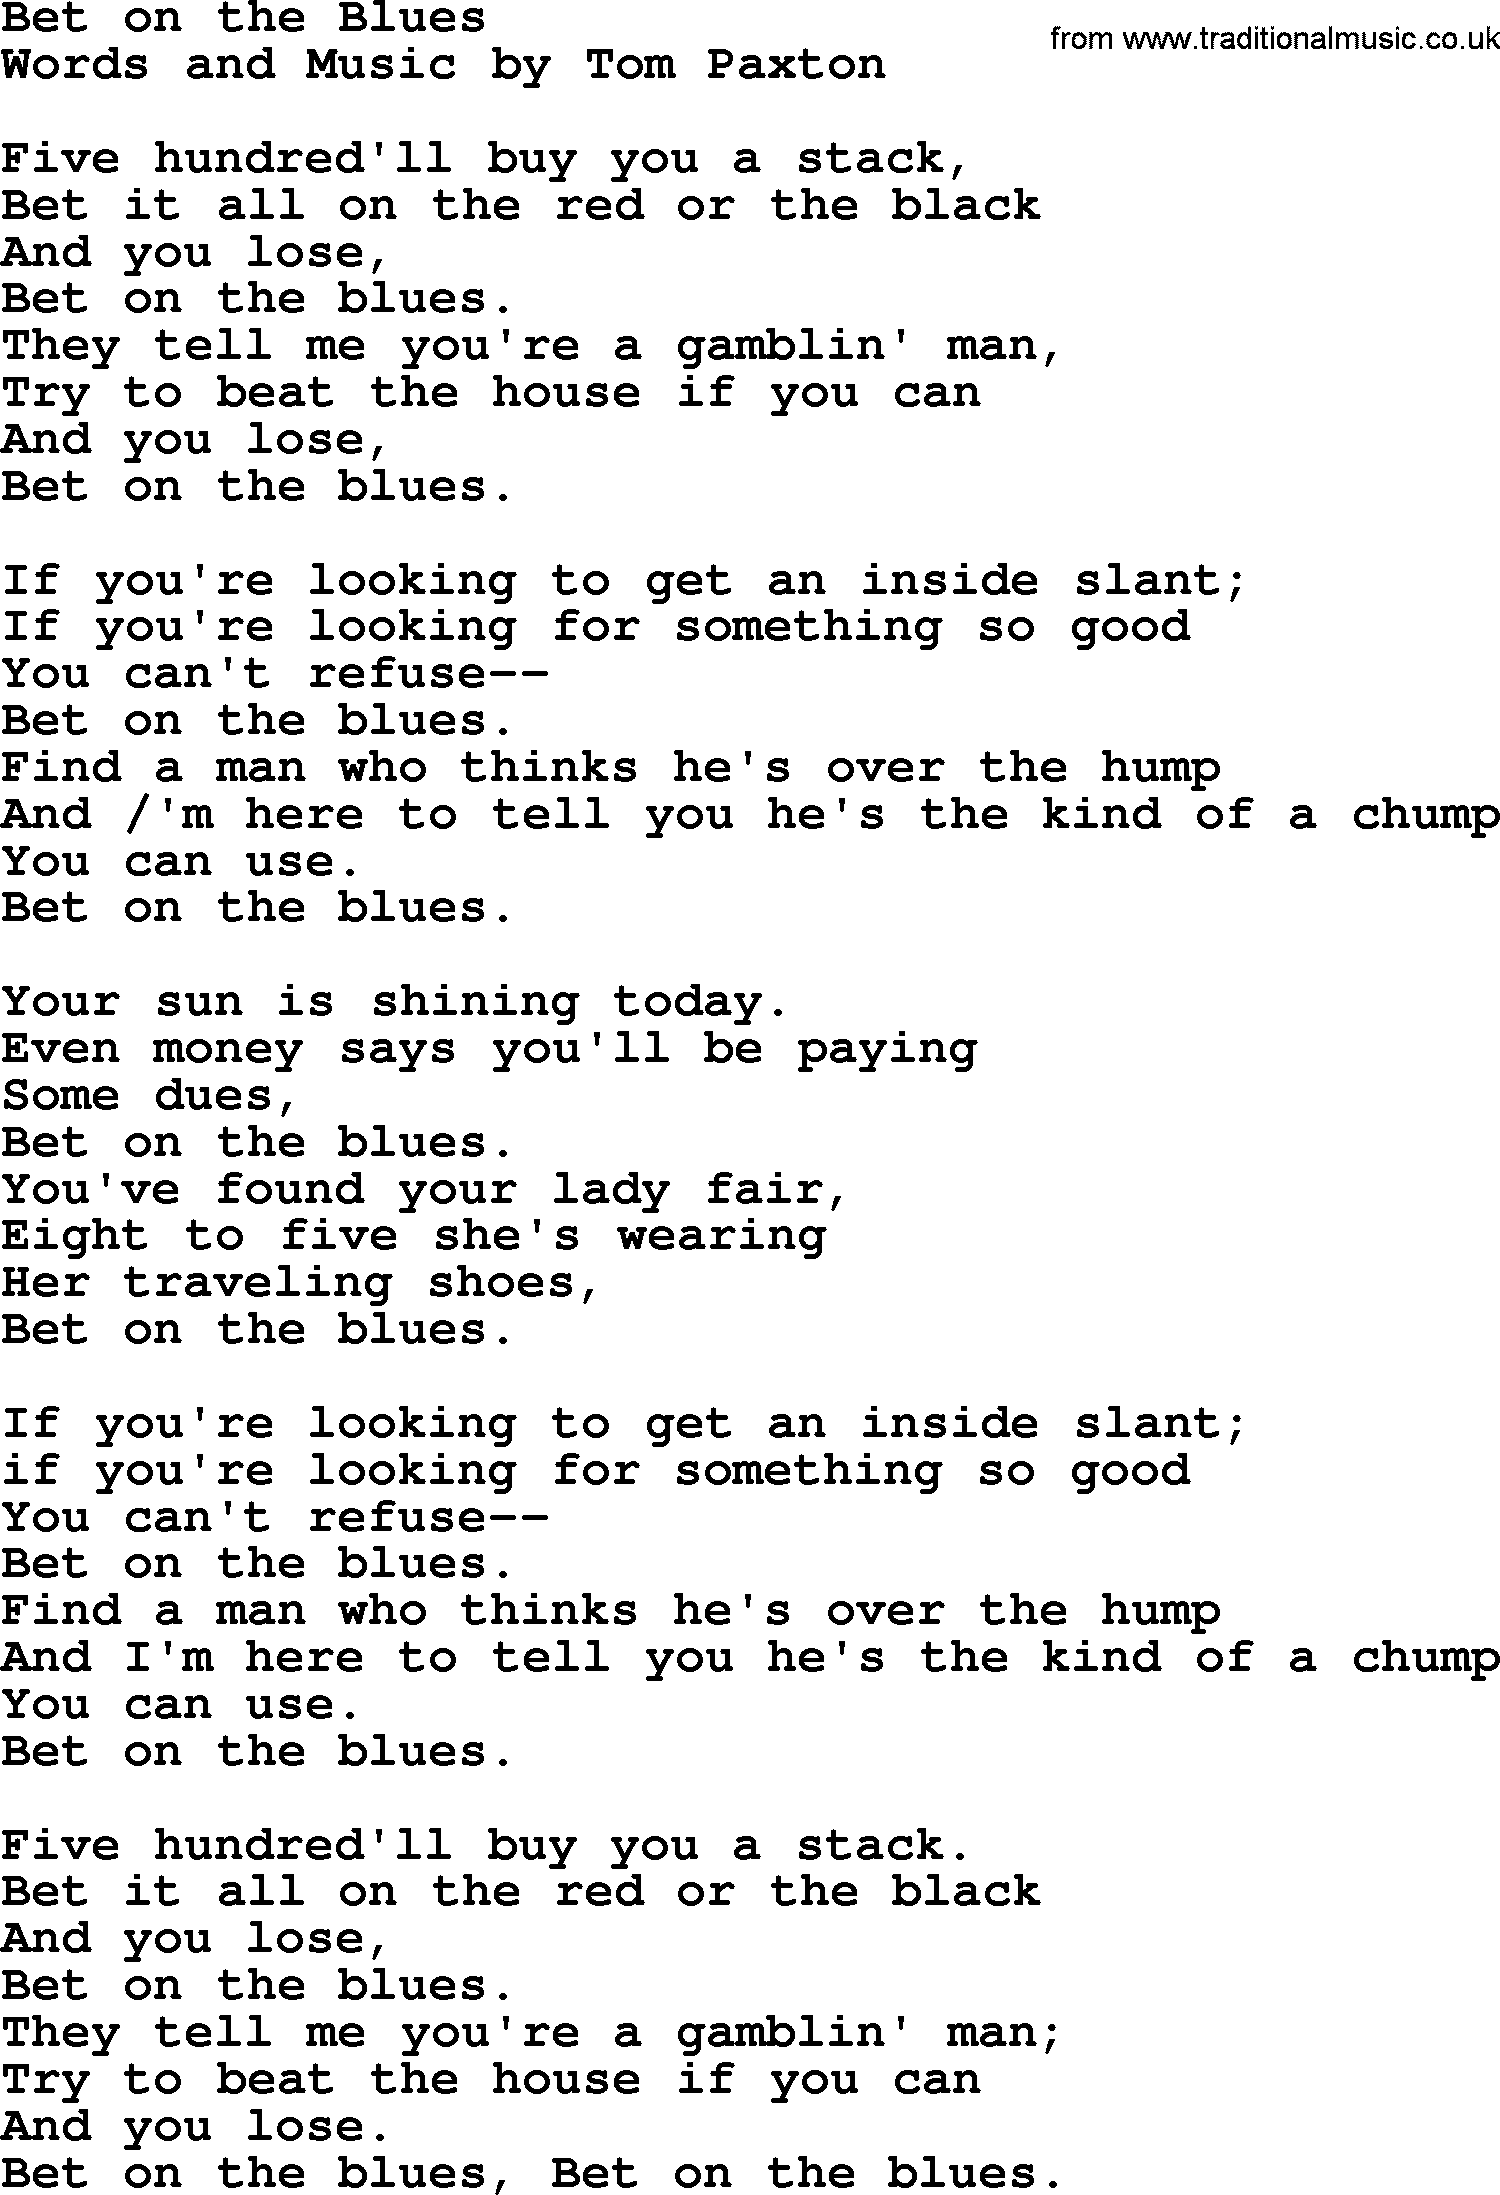 Tom Paxton song: Bet On The Blues, lyrics